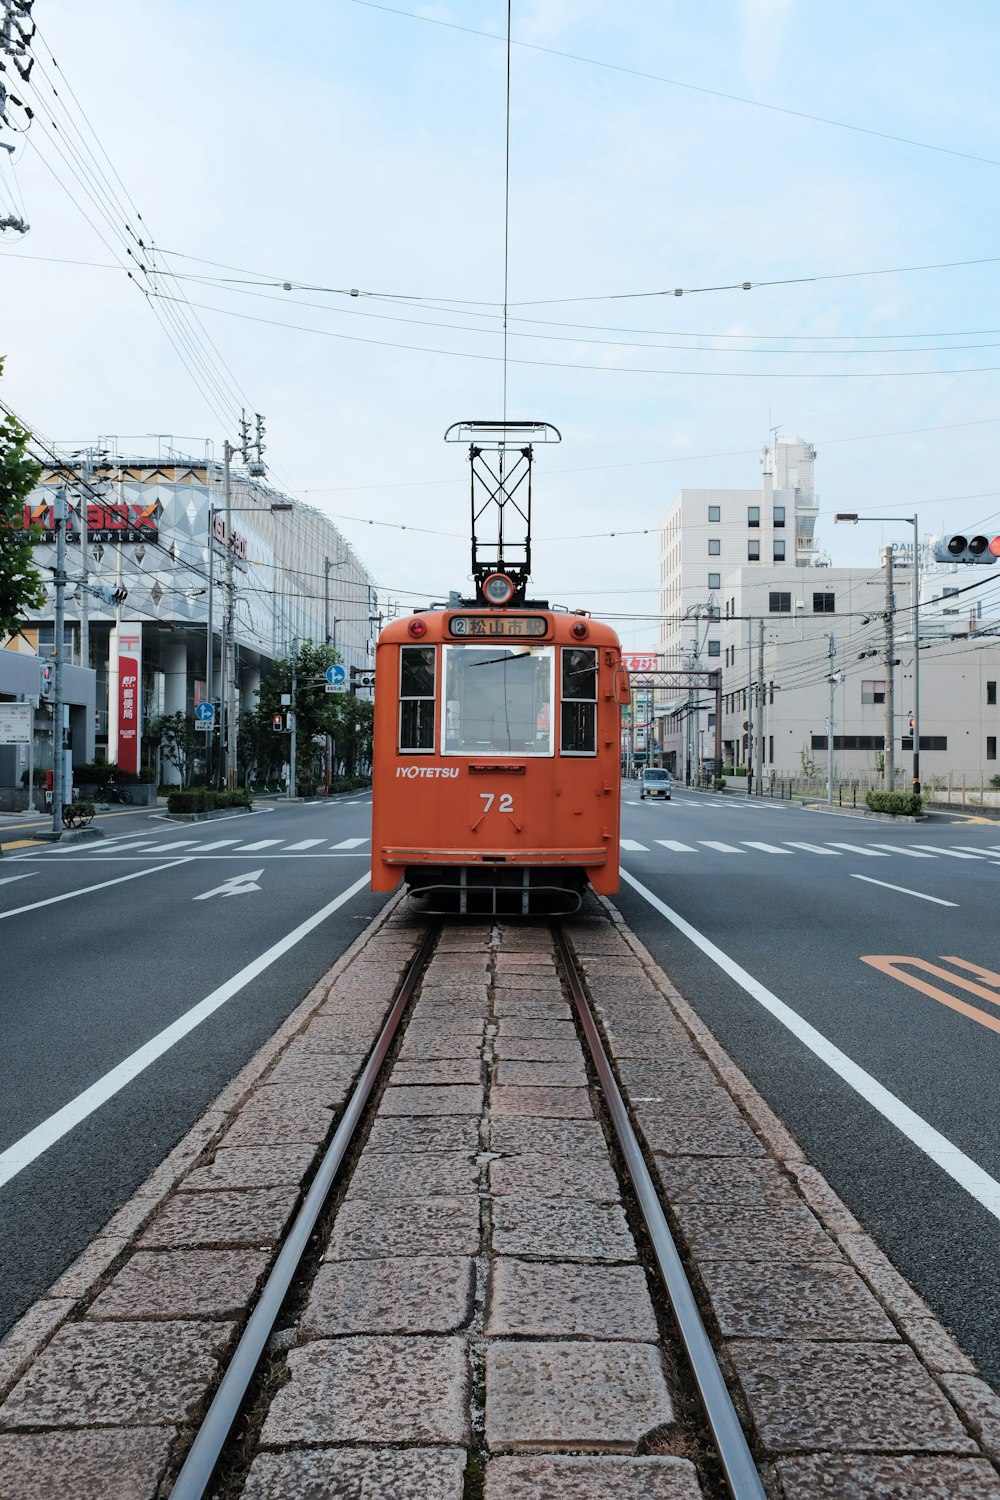 orange train cable car photo – Free Brown Image on Unsplash